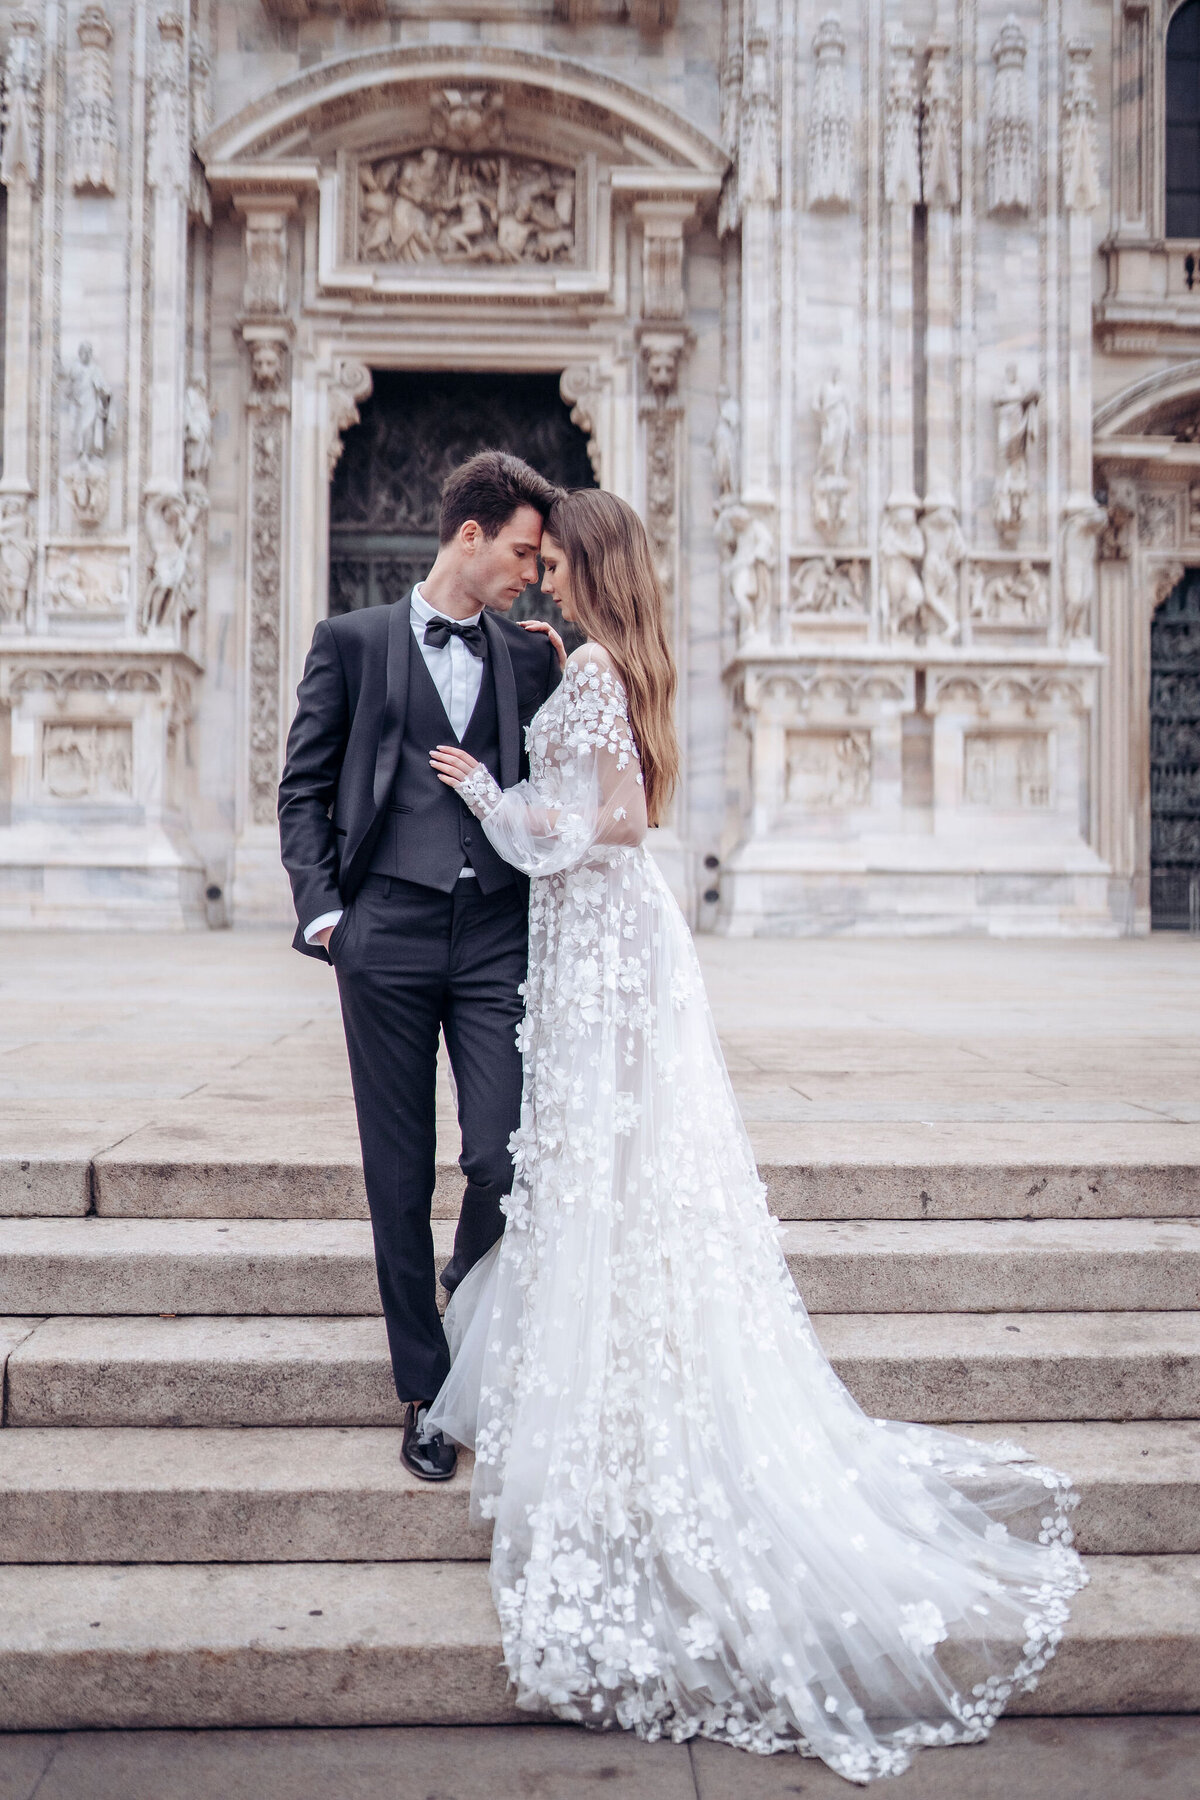 050-Milan-Duomo-Inspiration-Love-Story Elopement-Cinematic-Romance-Destination-Wedding-Editorial-Luxury-Fine-Art-Lisa-Vigliotta-Photography